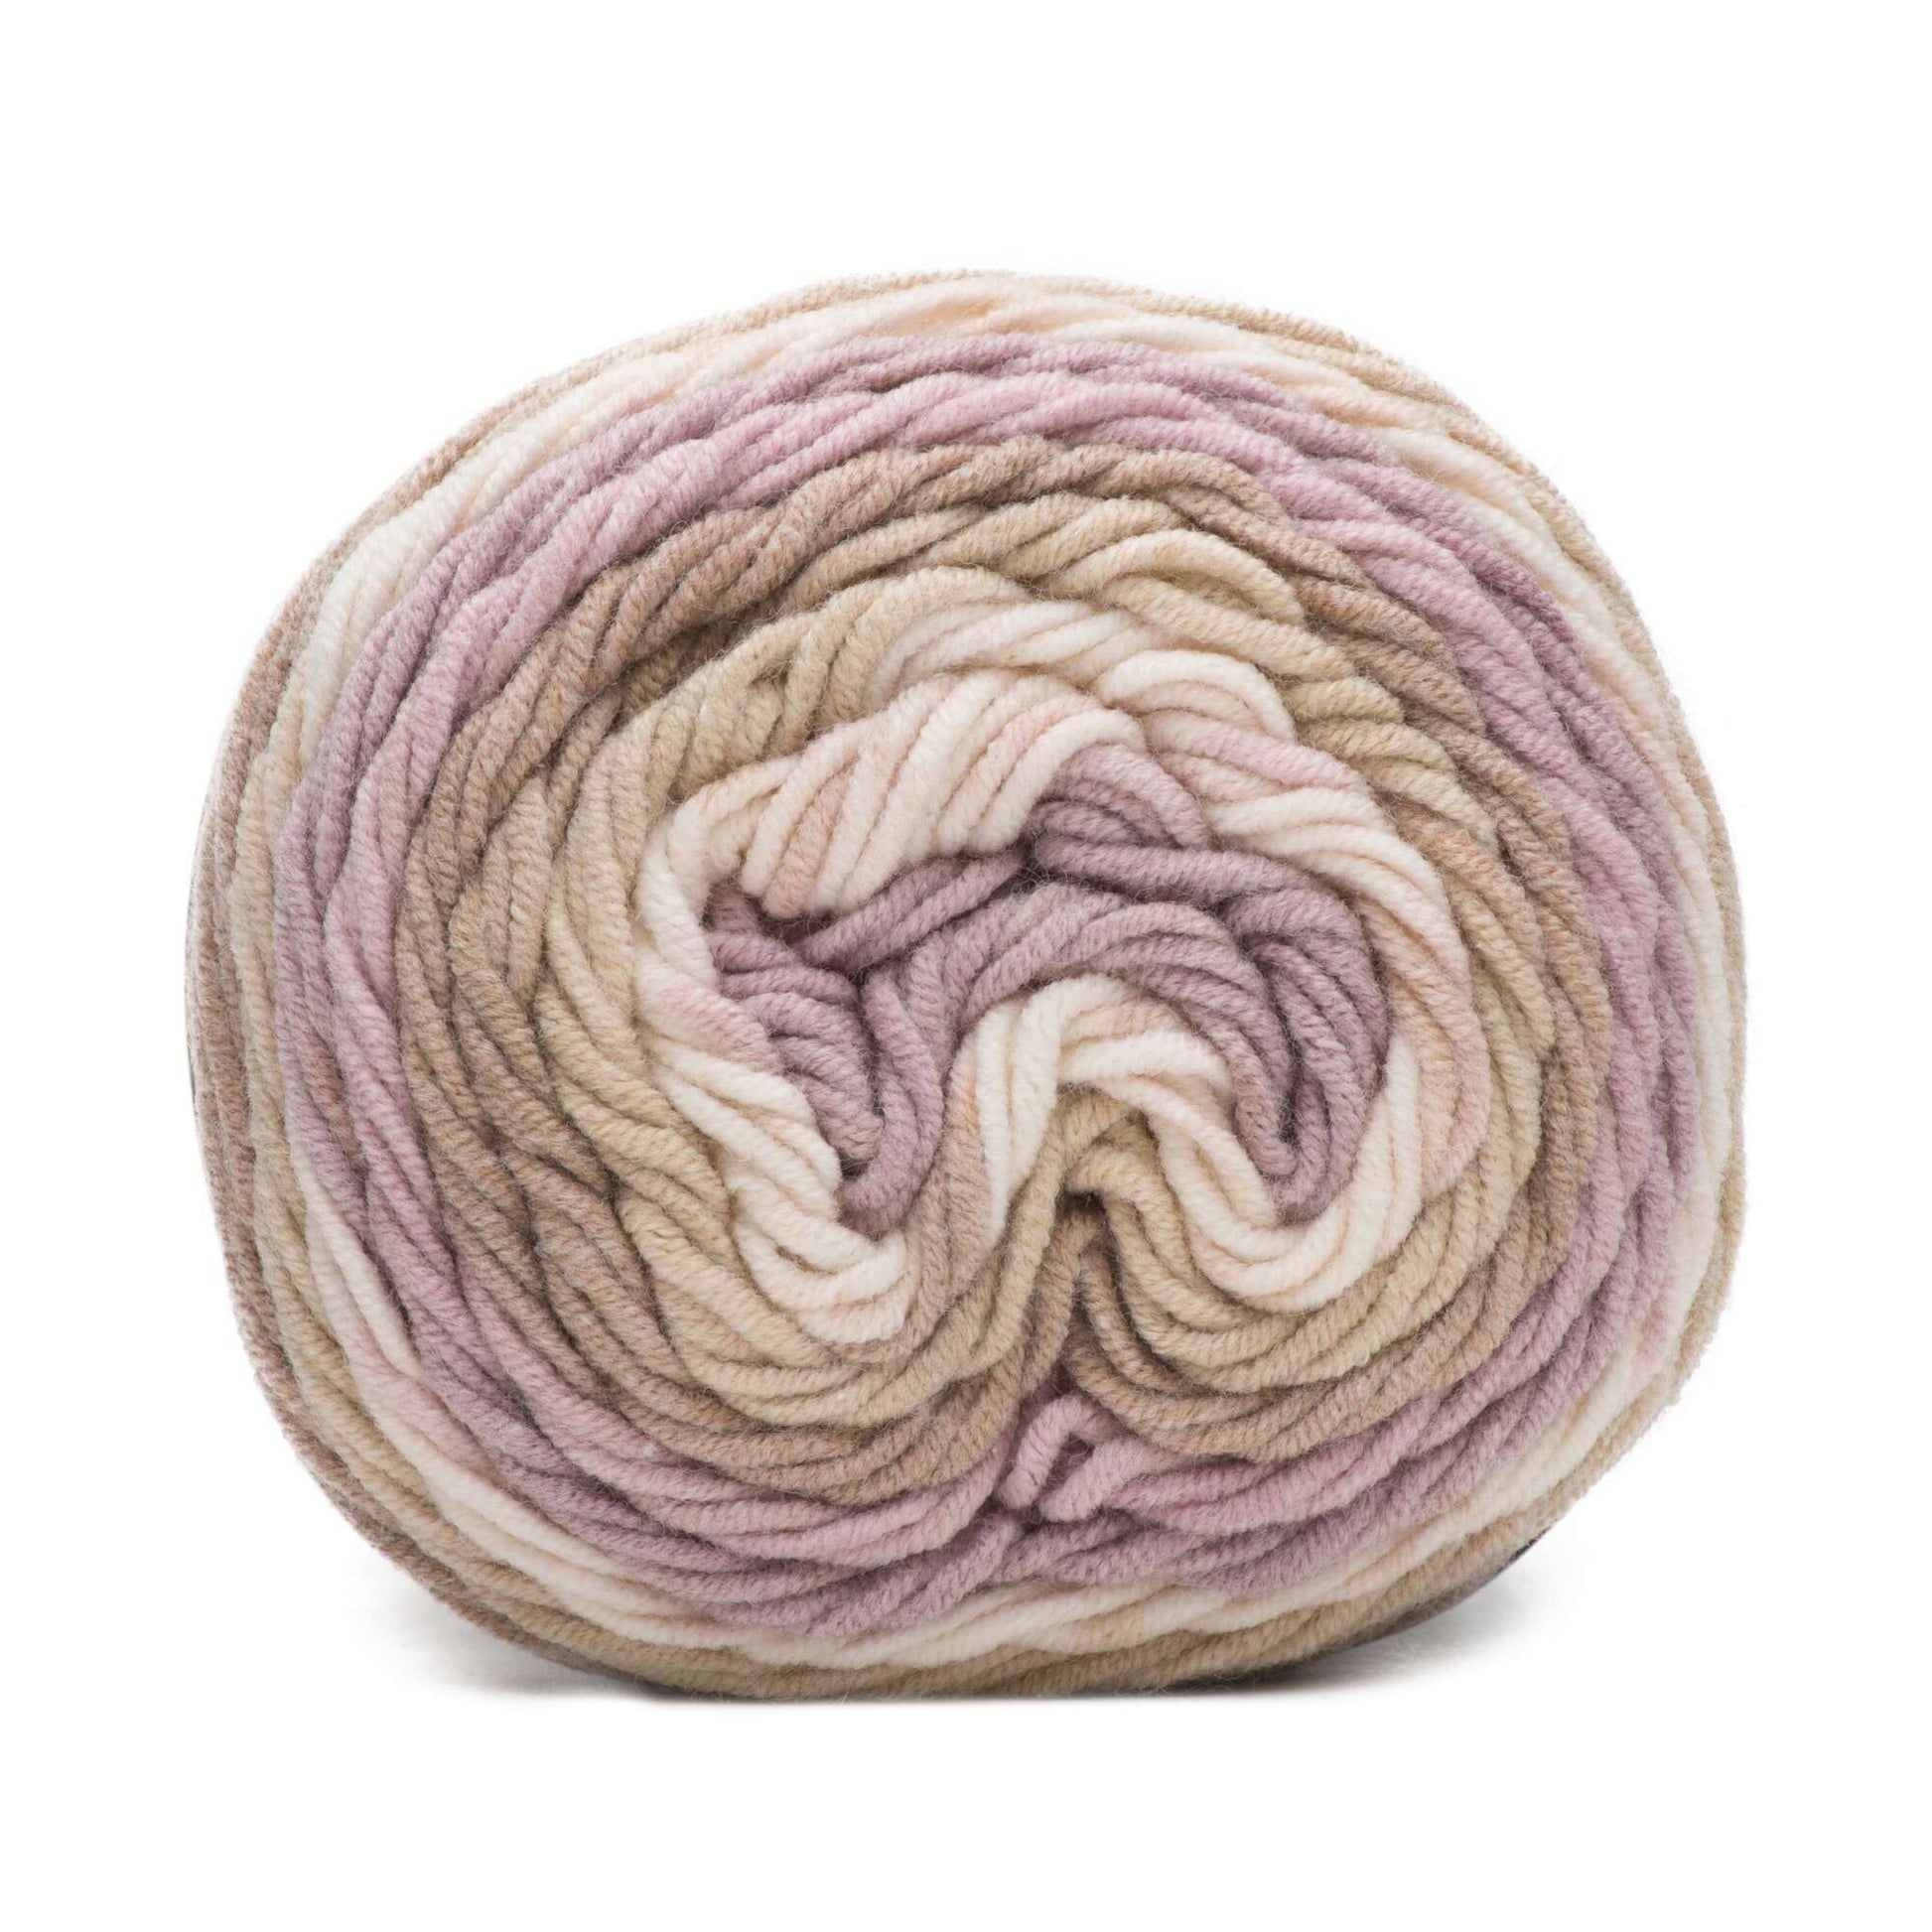 Caron Cotton Cakes Yarn - Clearance Shades*